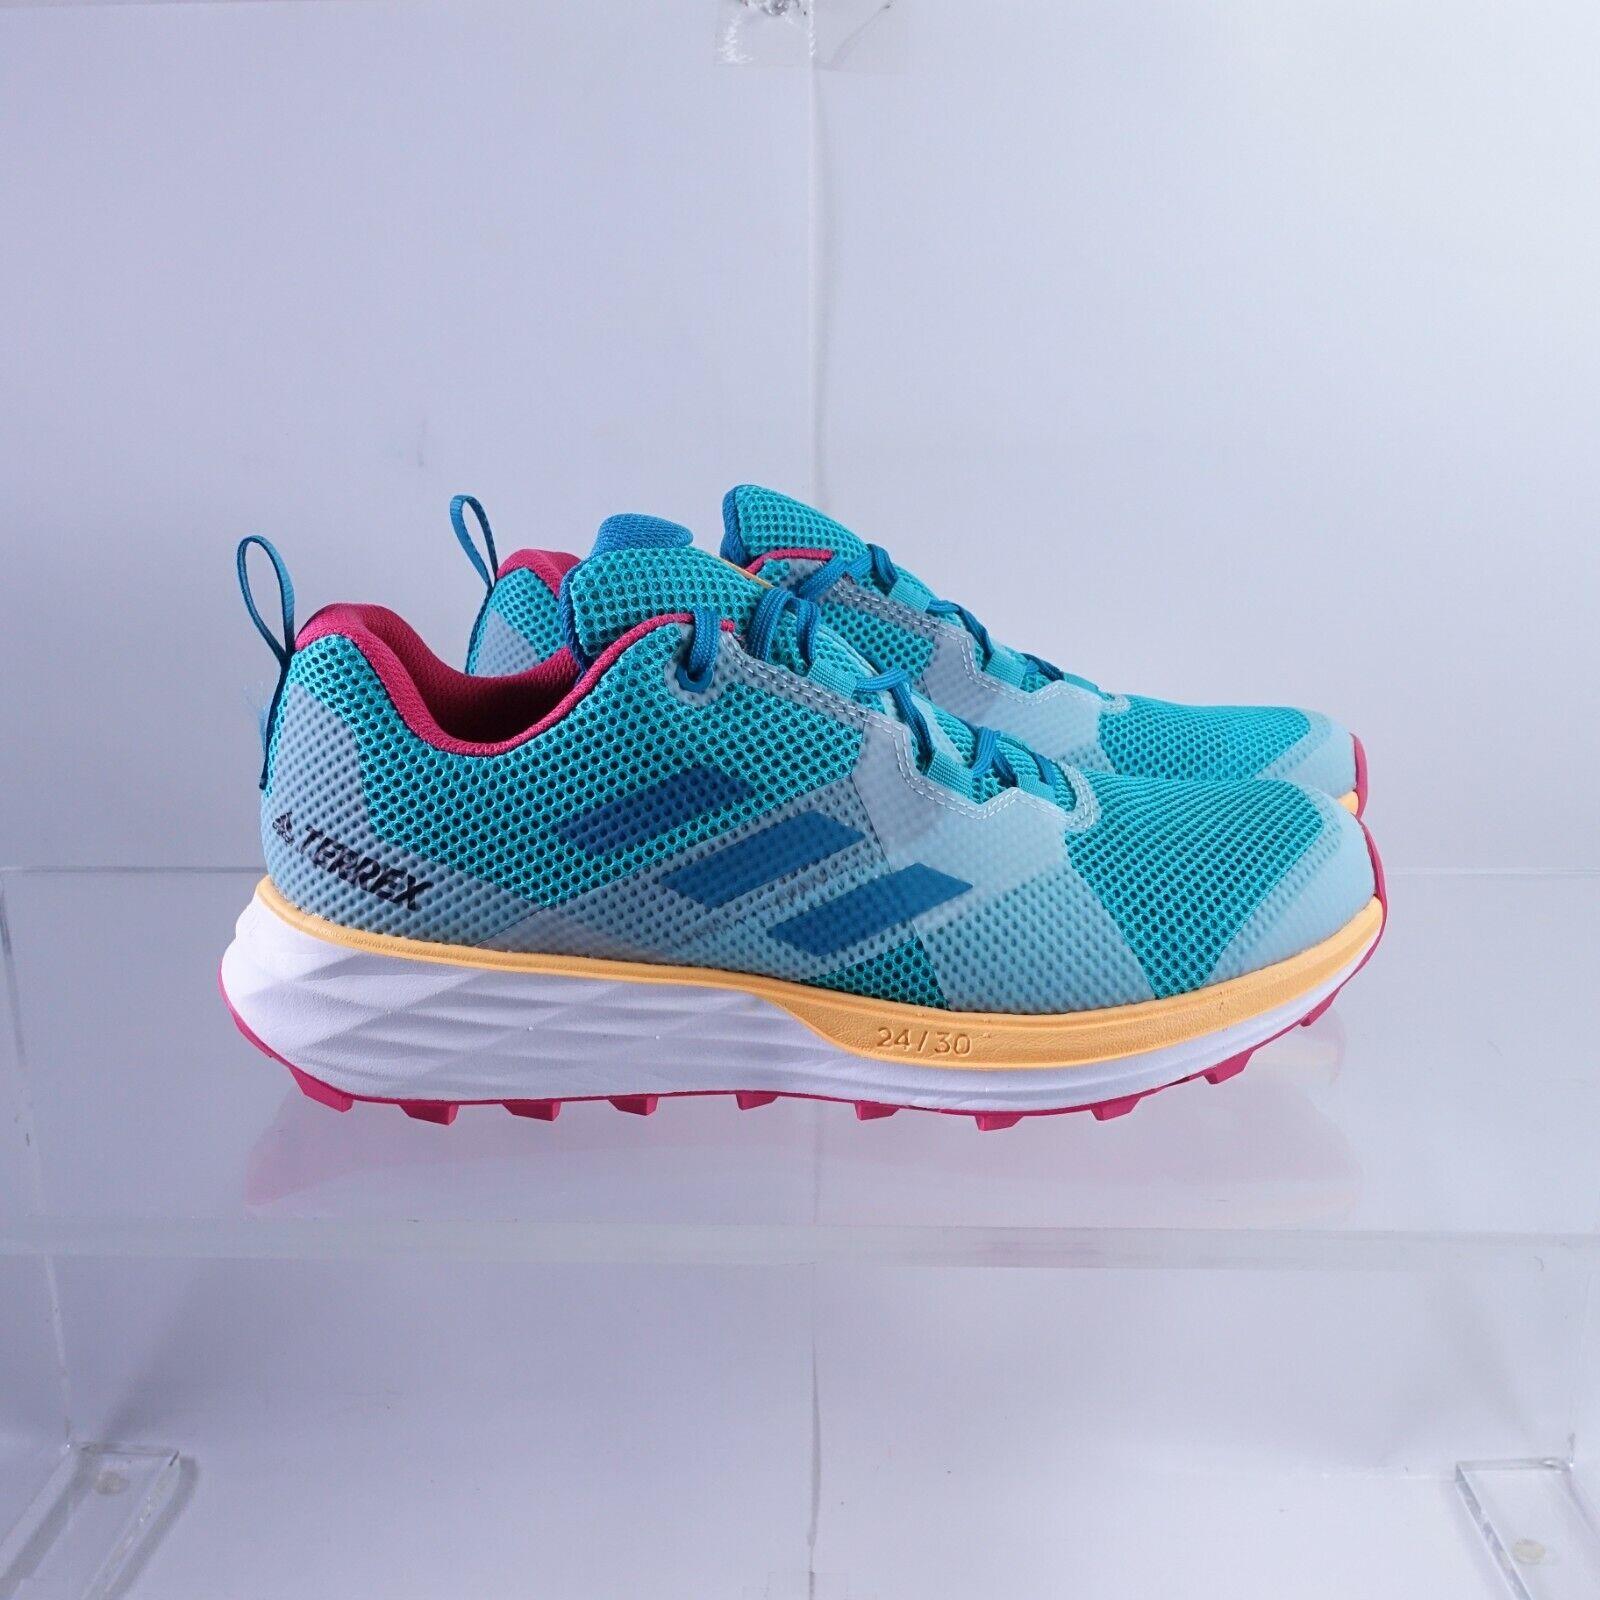 Size 9.5 Women`s Adidas Terrex Two Hiking Shoes FV7354 Hi-res Aqua/active Teal